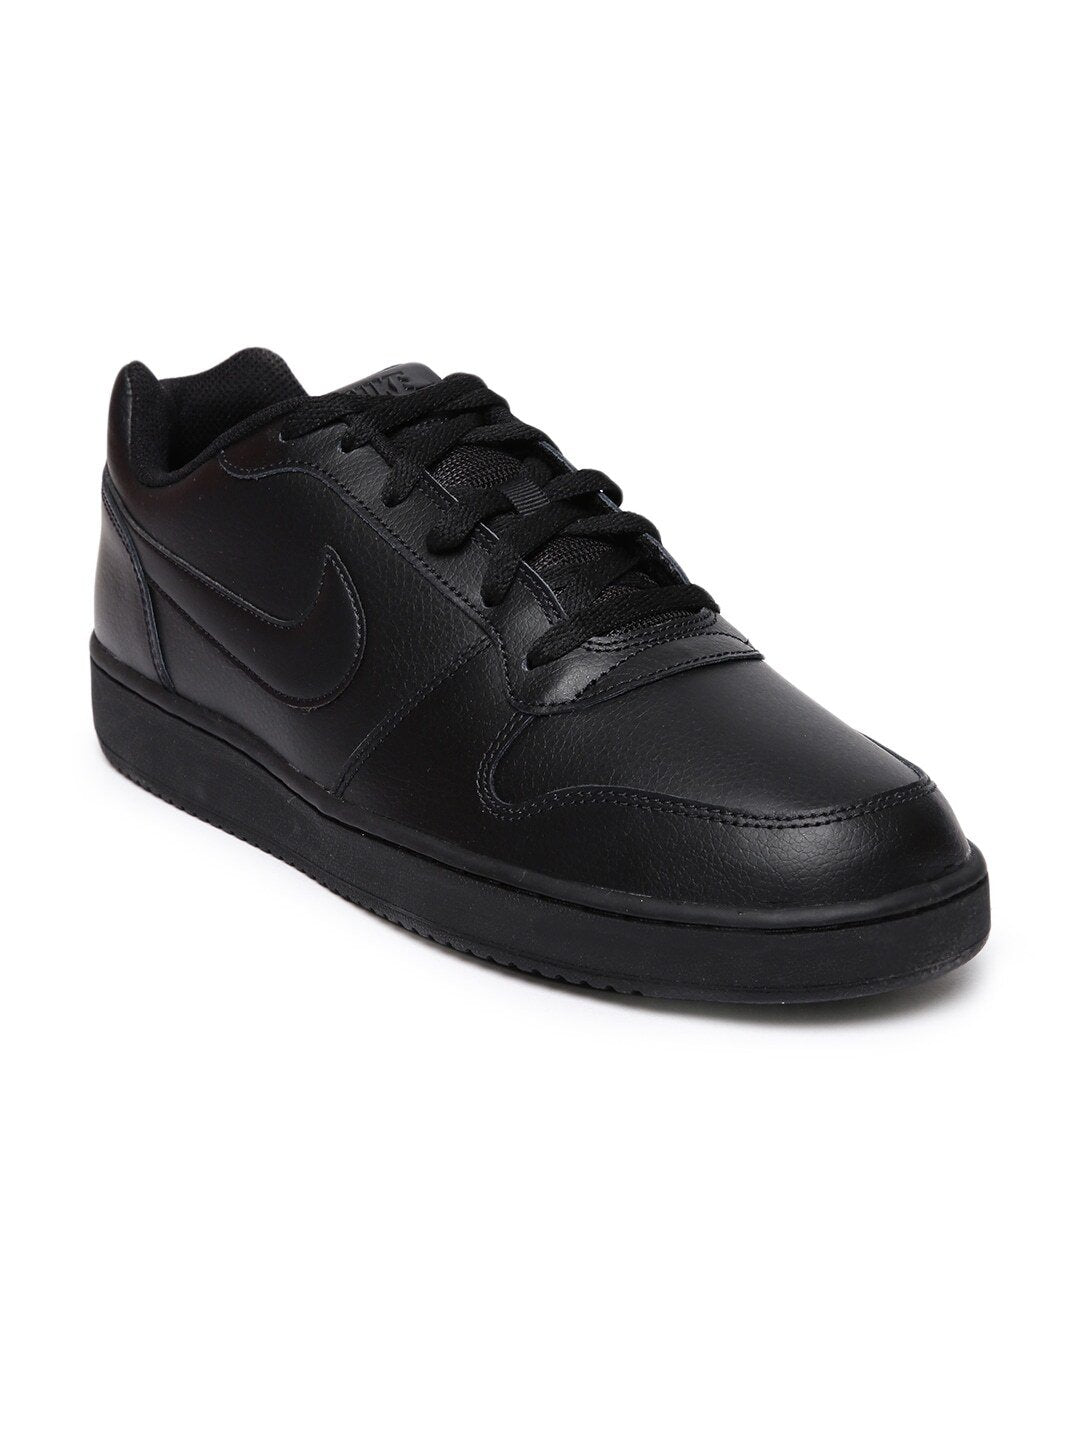 Men Black Ebernon Low Sneakers-Aq1775003